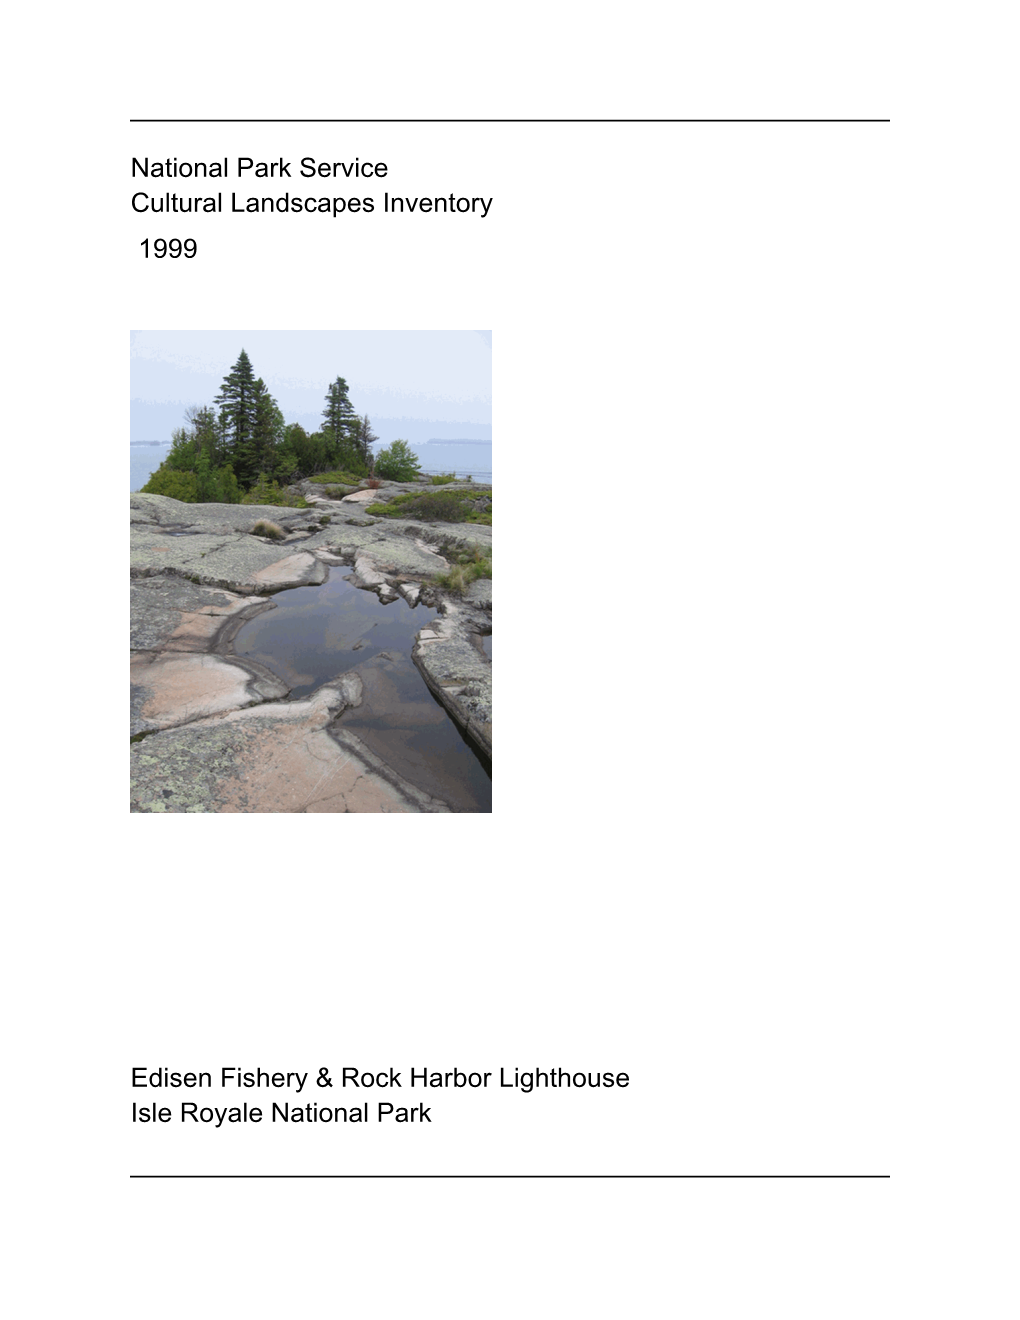 National Park Service Cultural Landscapes Inventory Edisen Fishery & Rock Harbor Lighthouse Isle Royale National Park 1999